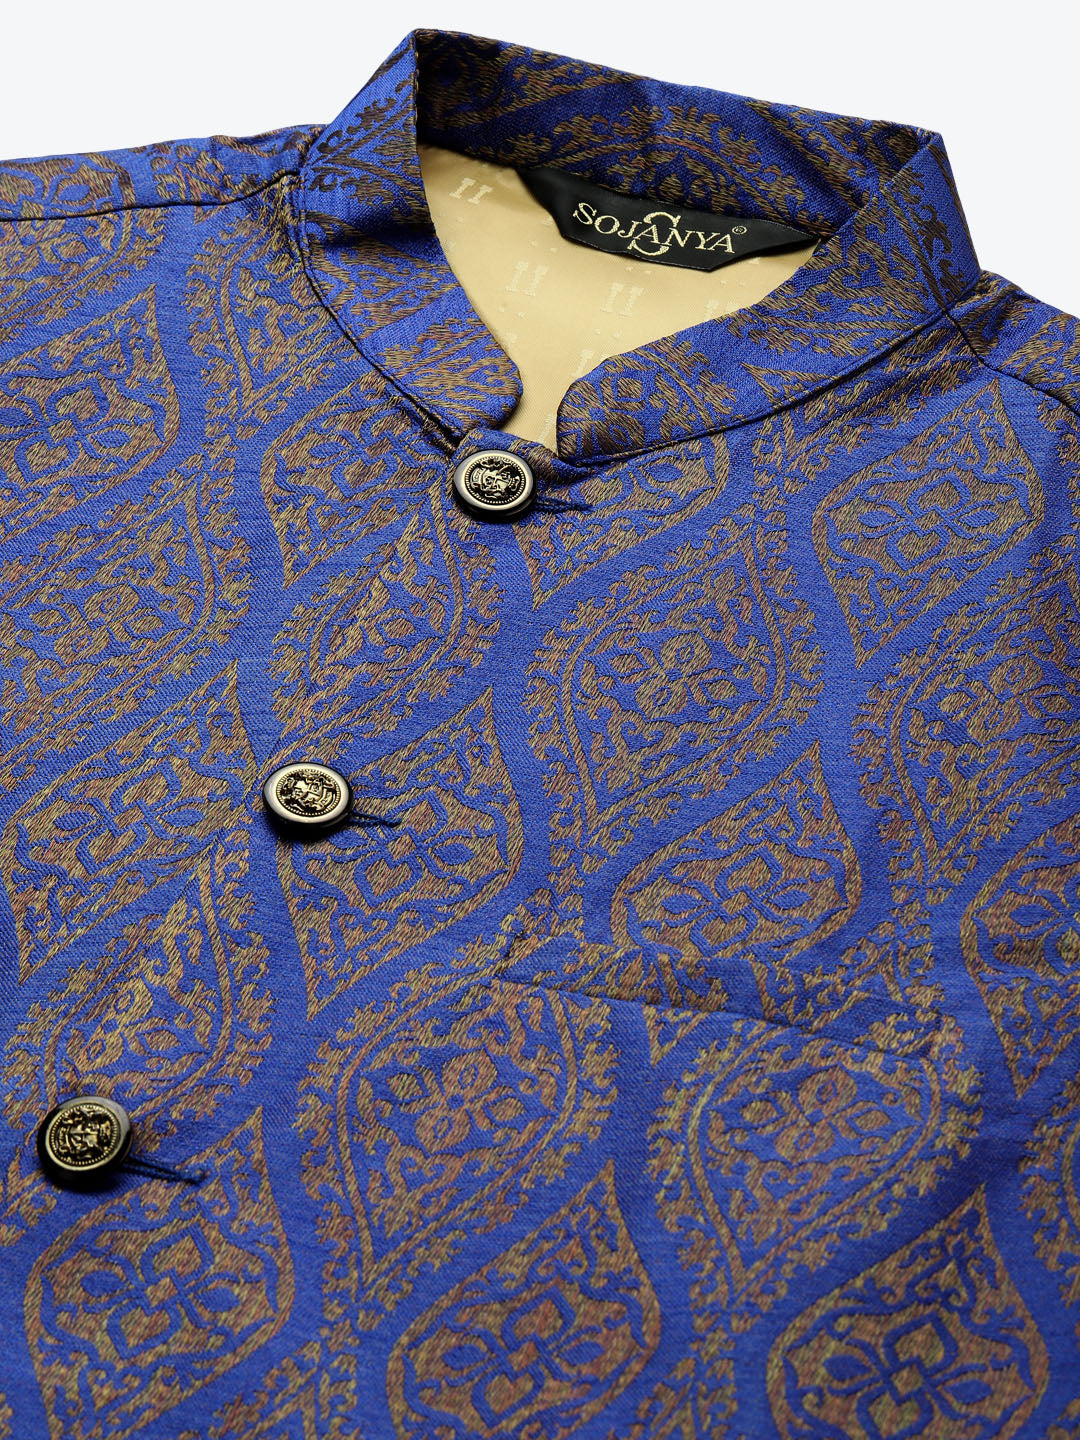 Men's Jacquard Silk Blue & Gold Nehru Jacket - Sojanya